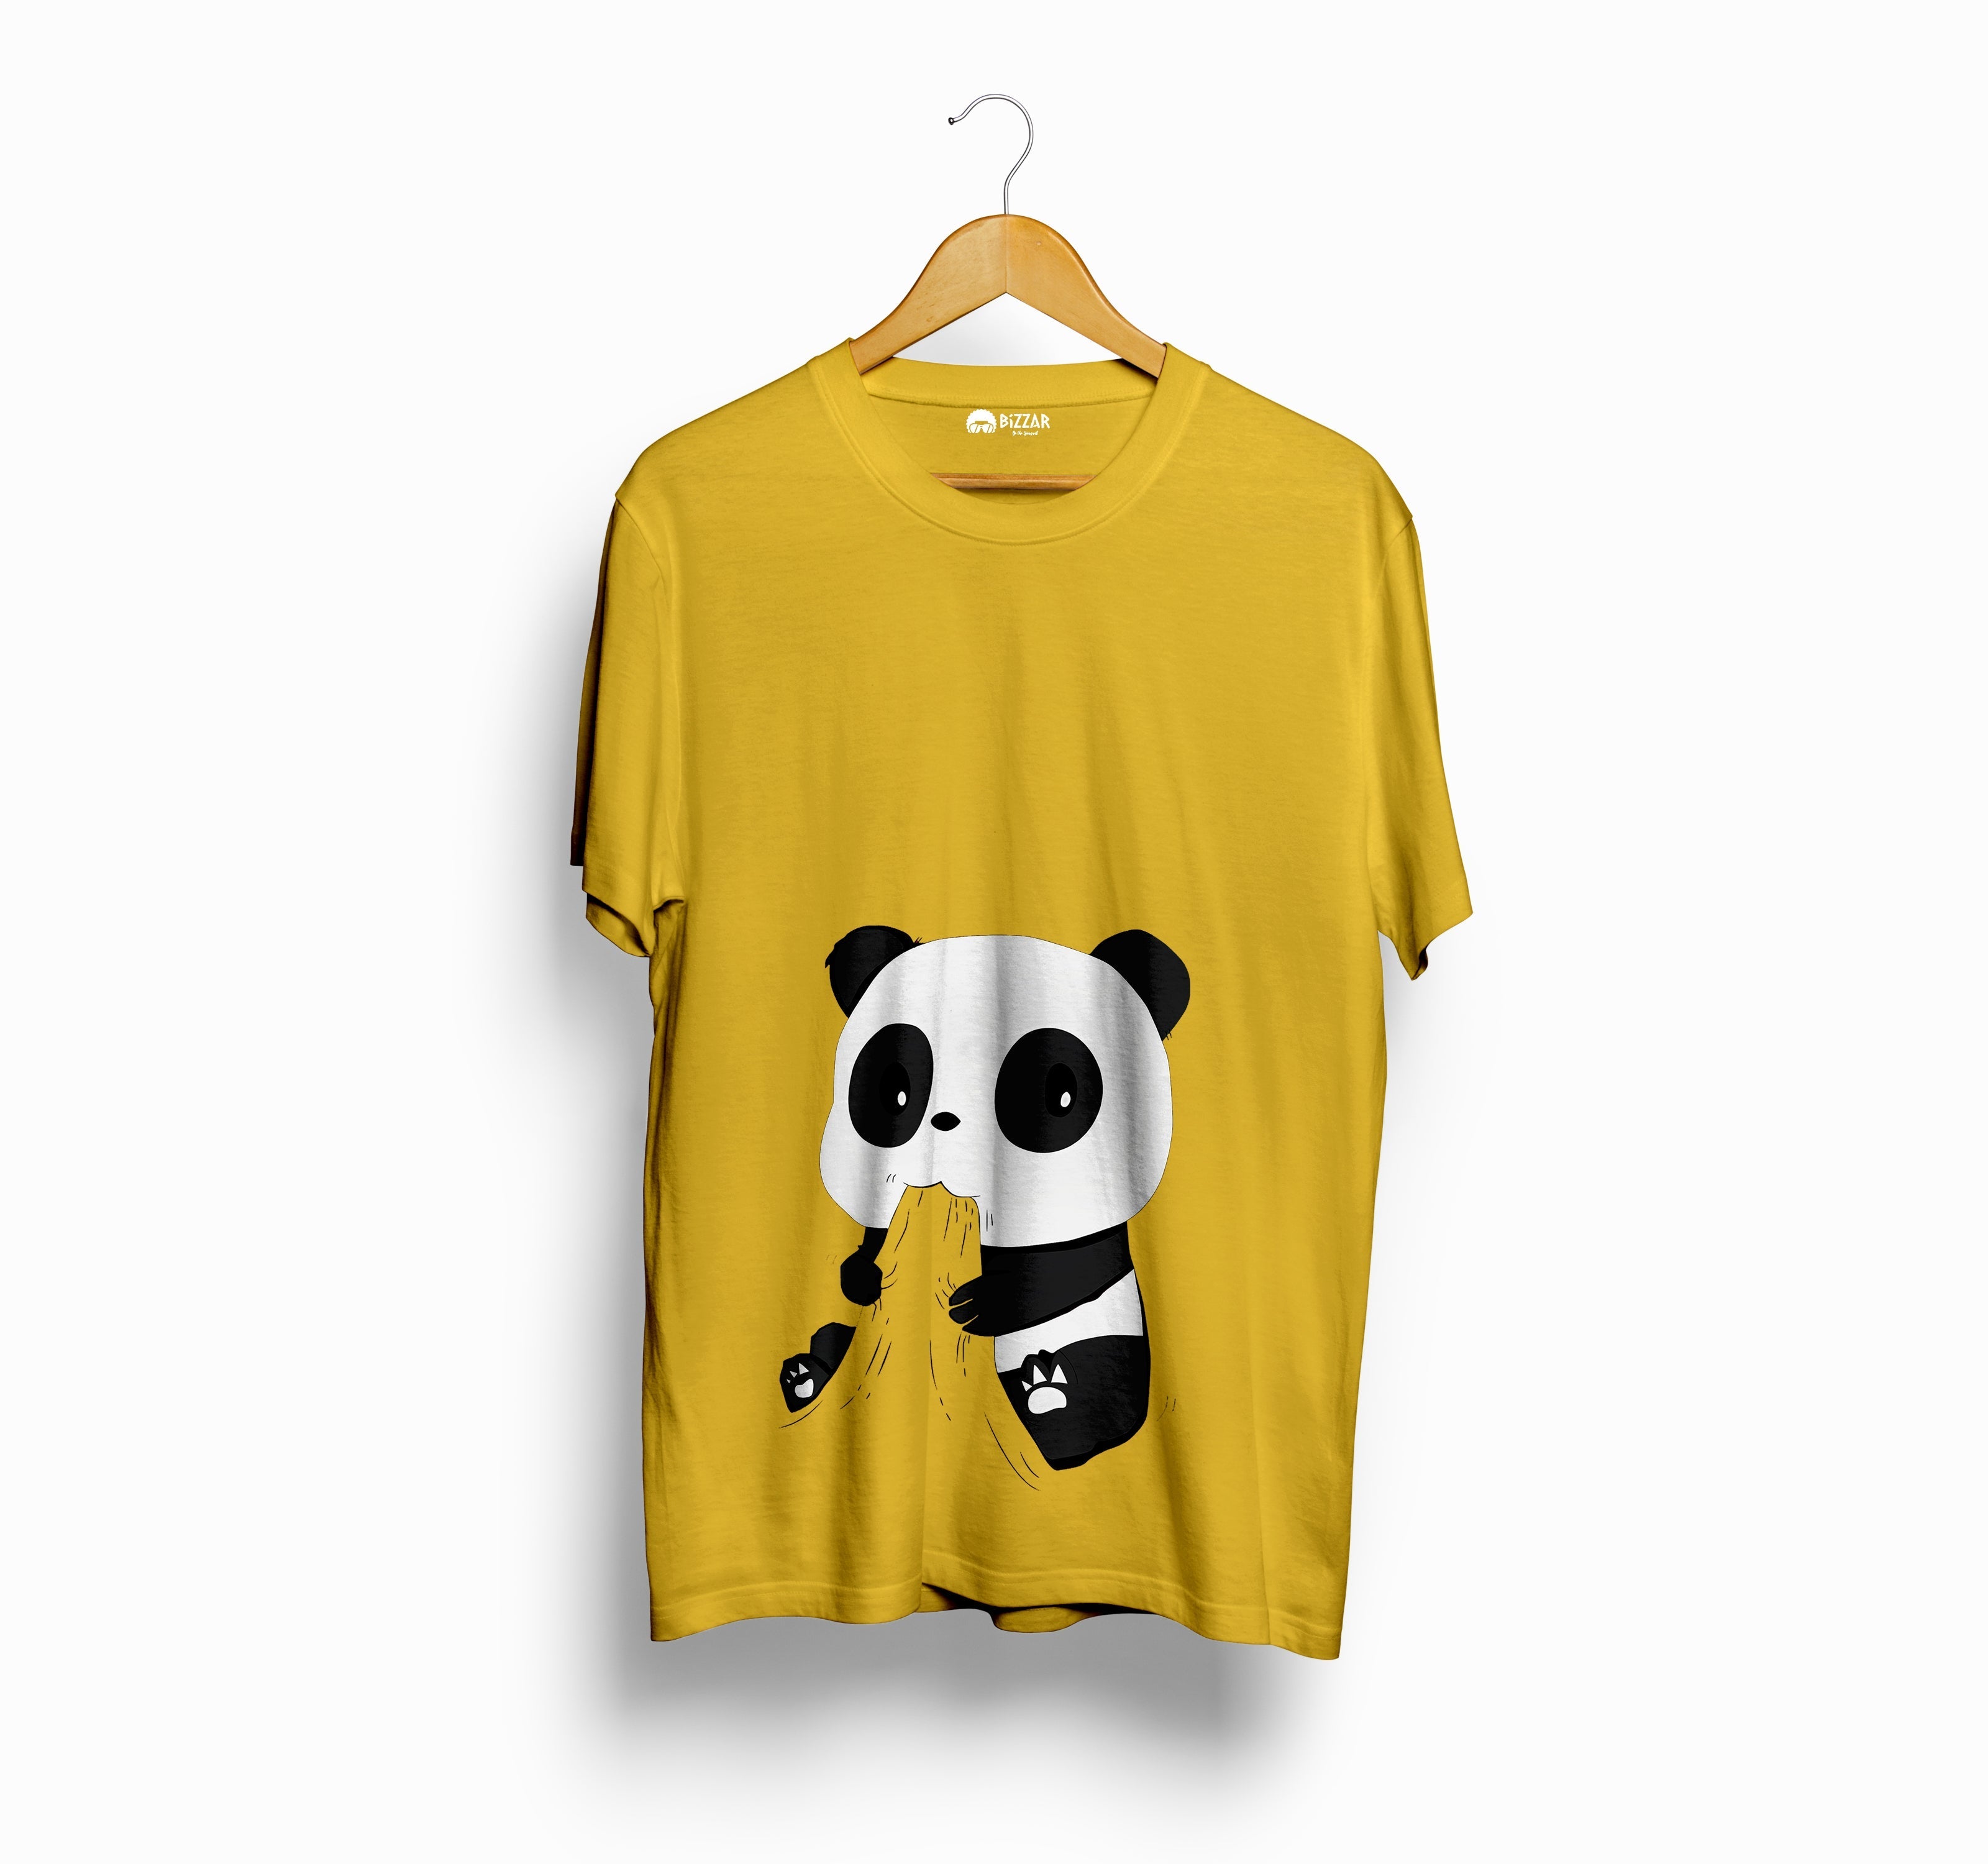 Bizzar's Hungry Panda Yellow T-Shirt